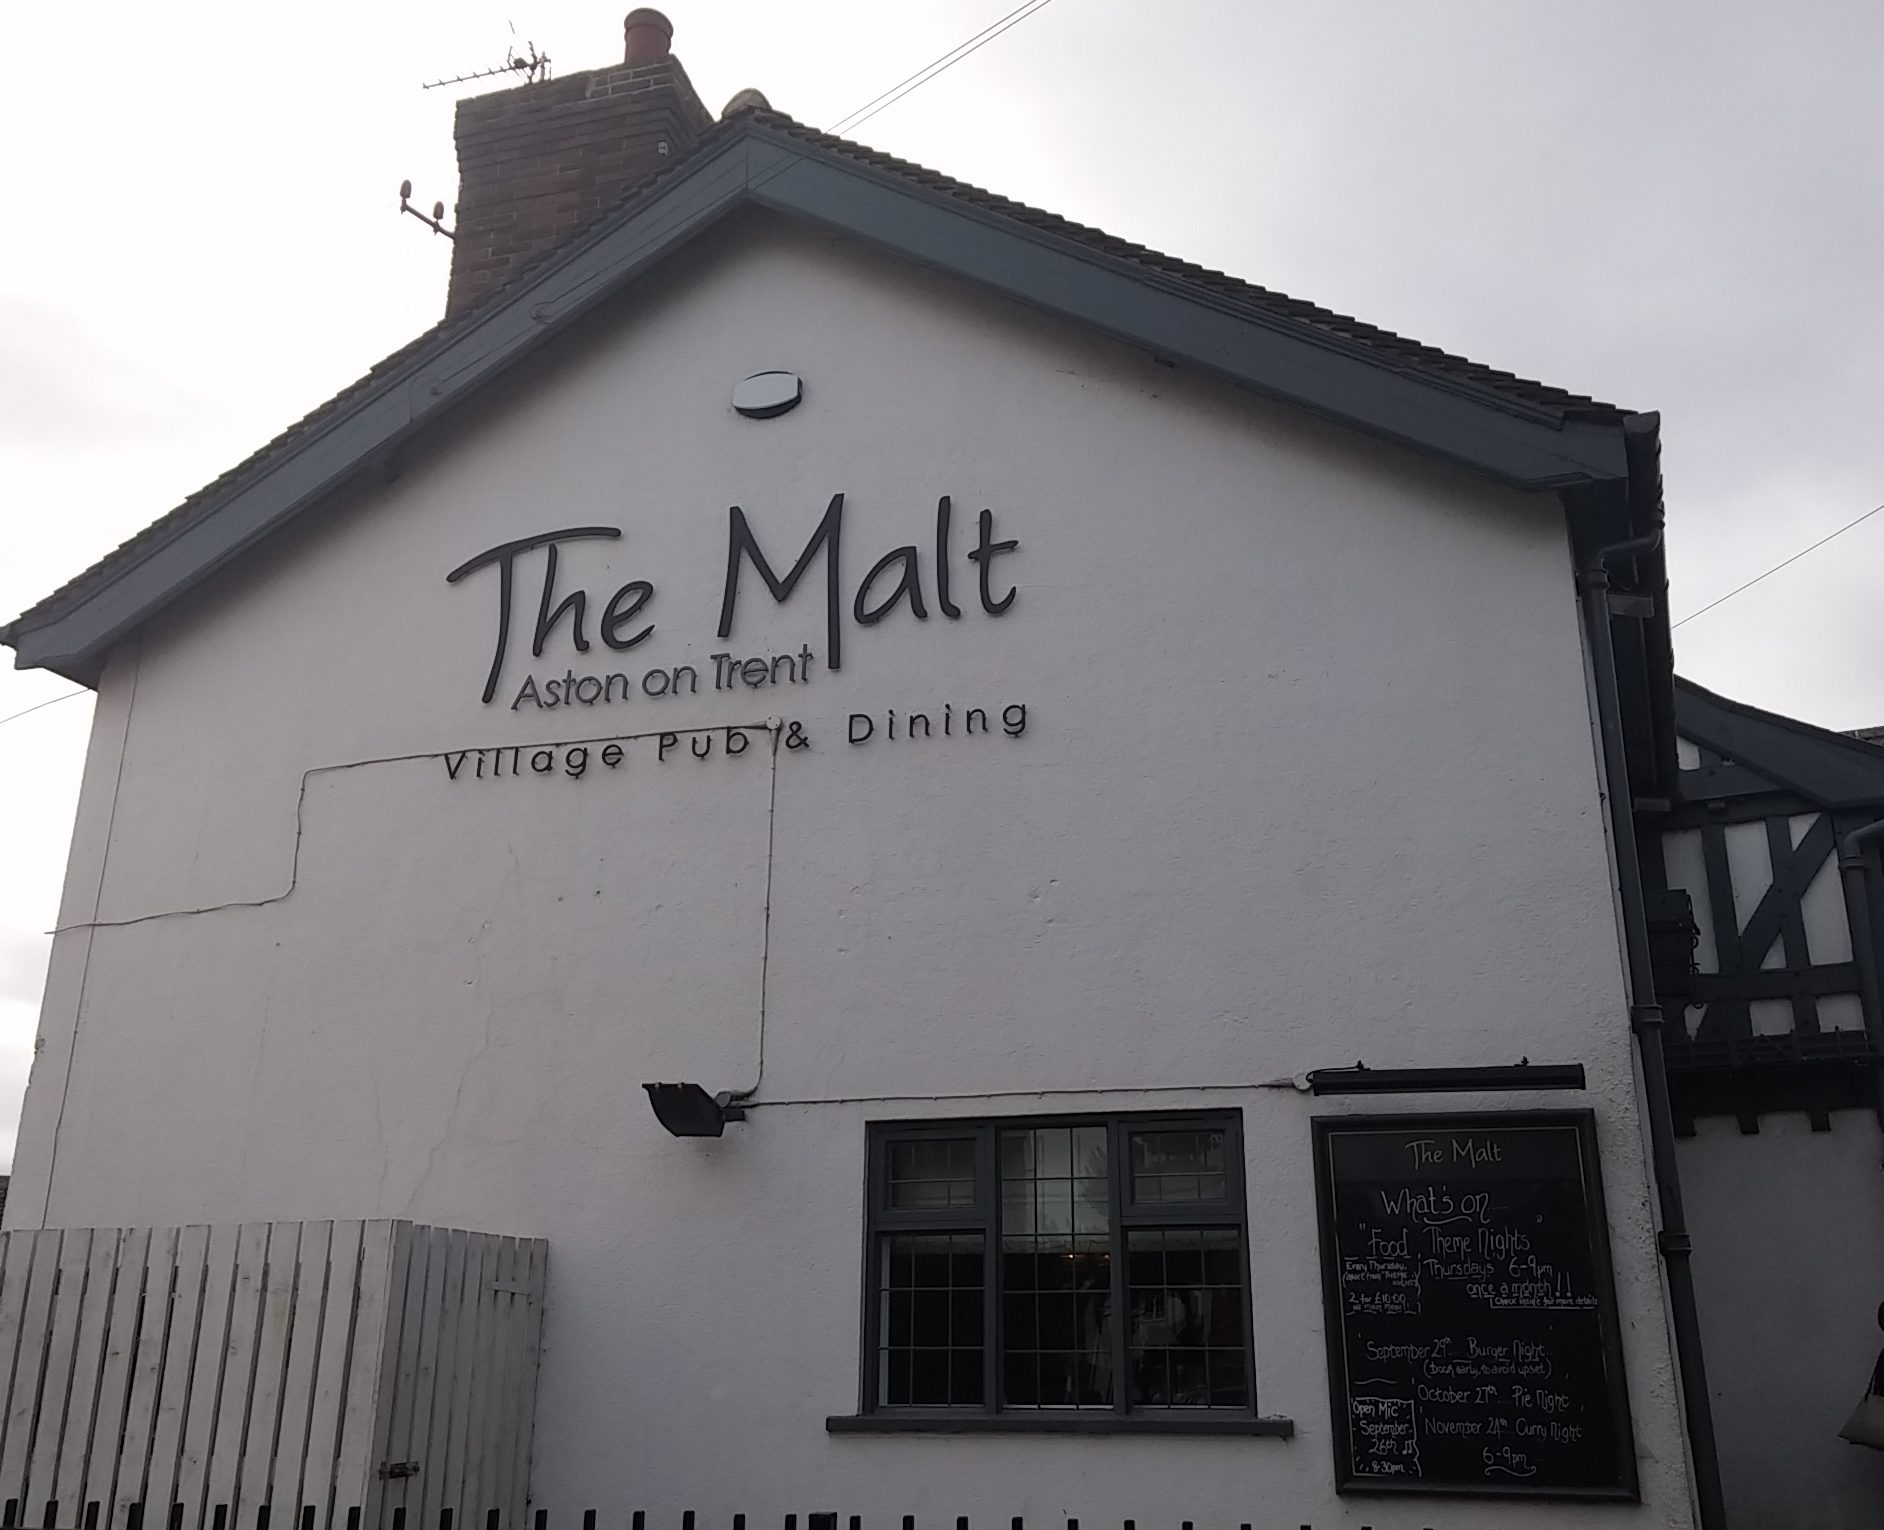 Gastropub review: The Malt, Aston-on-Trent, Derbyshire